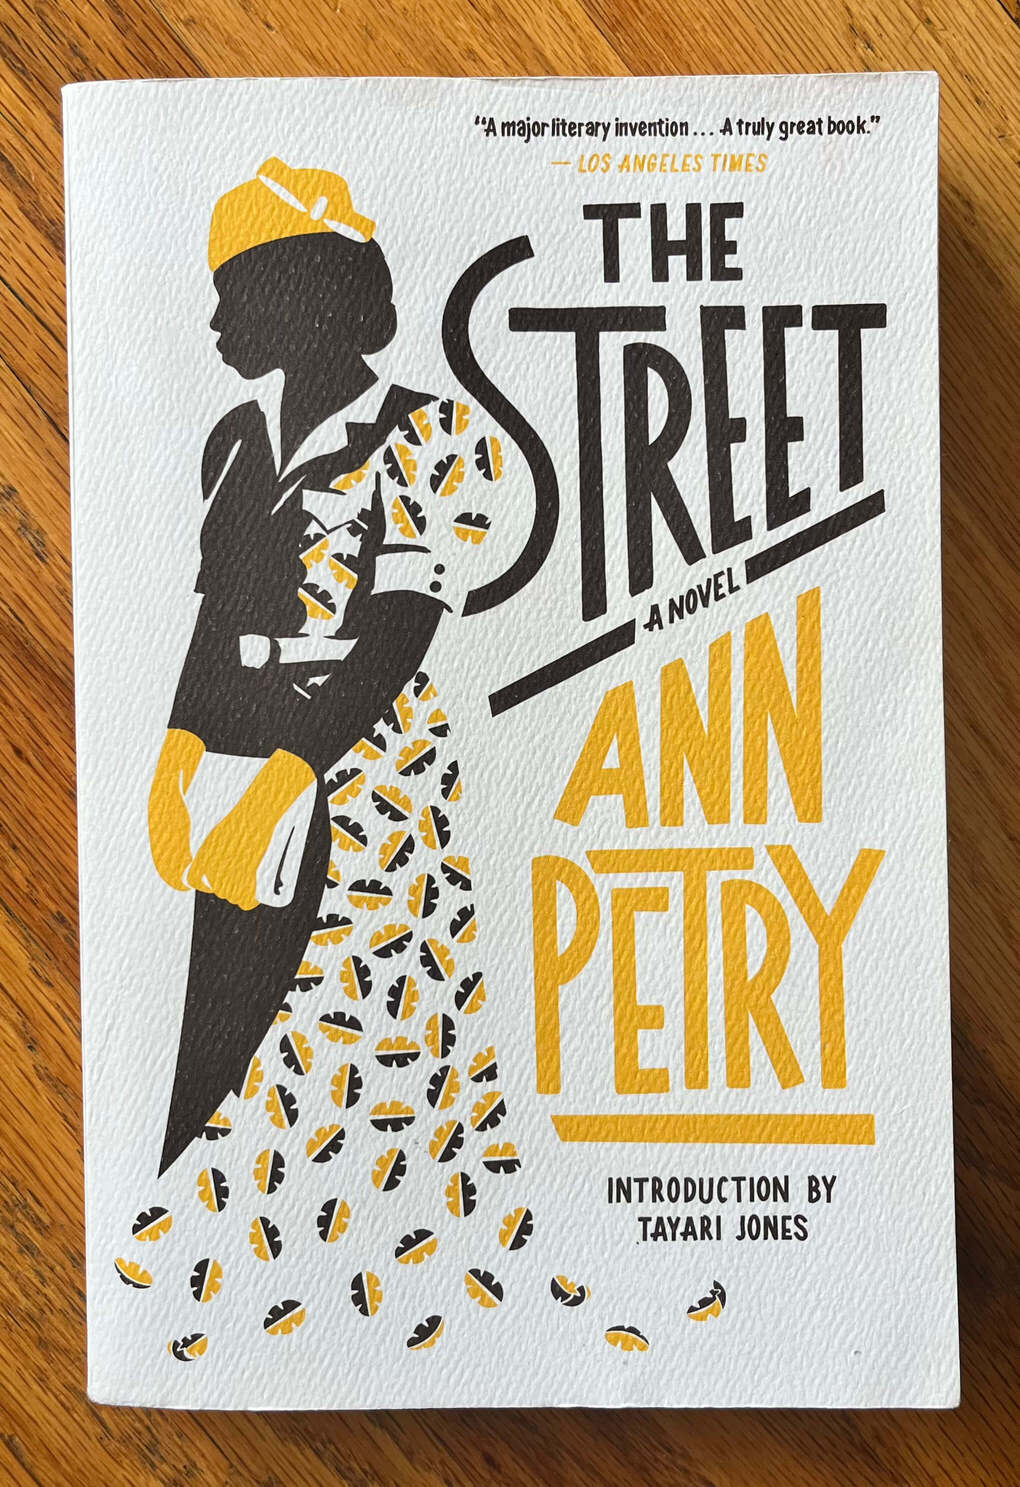 “The Street: A novel” by Ann Petry. Introduction by Tayari Jones